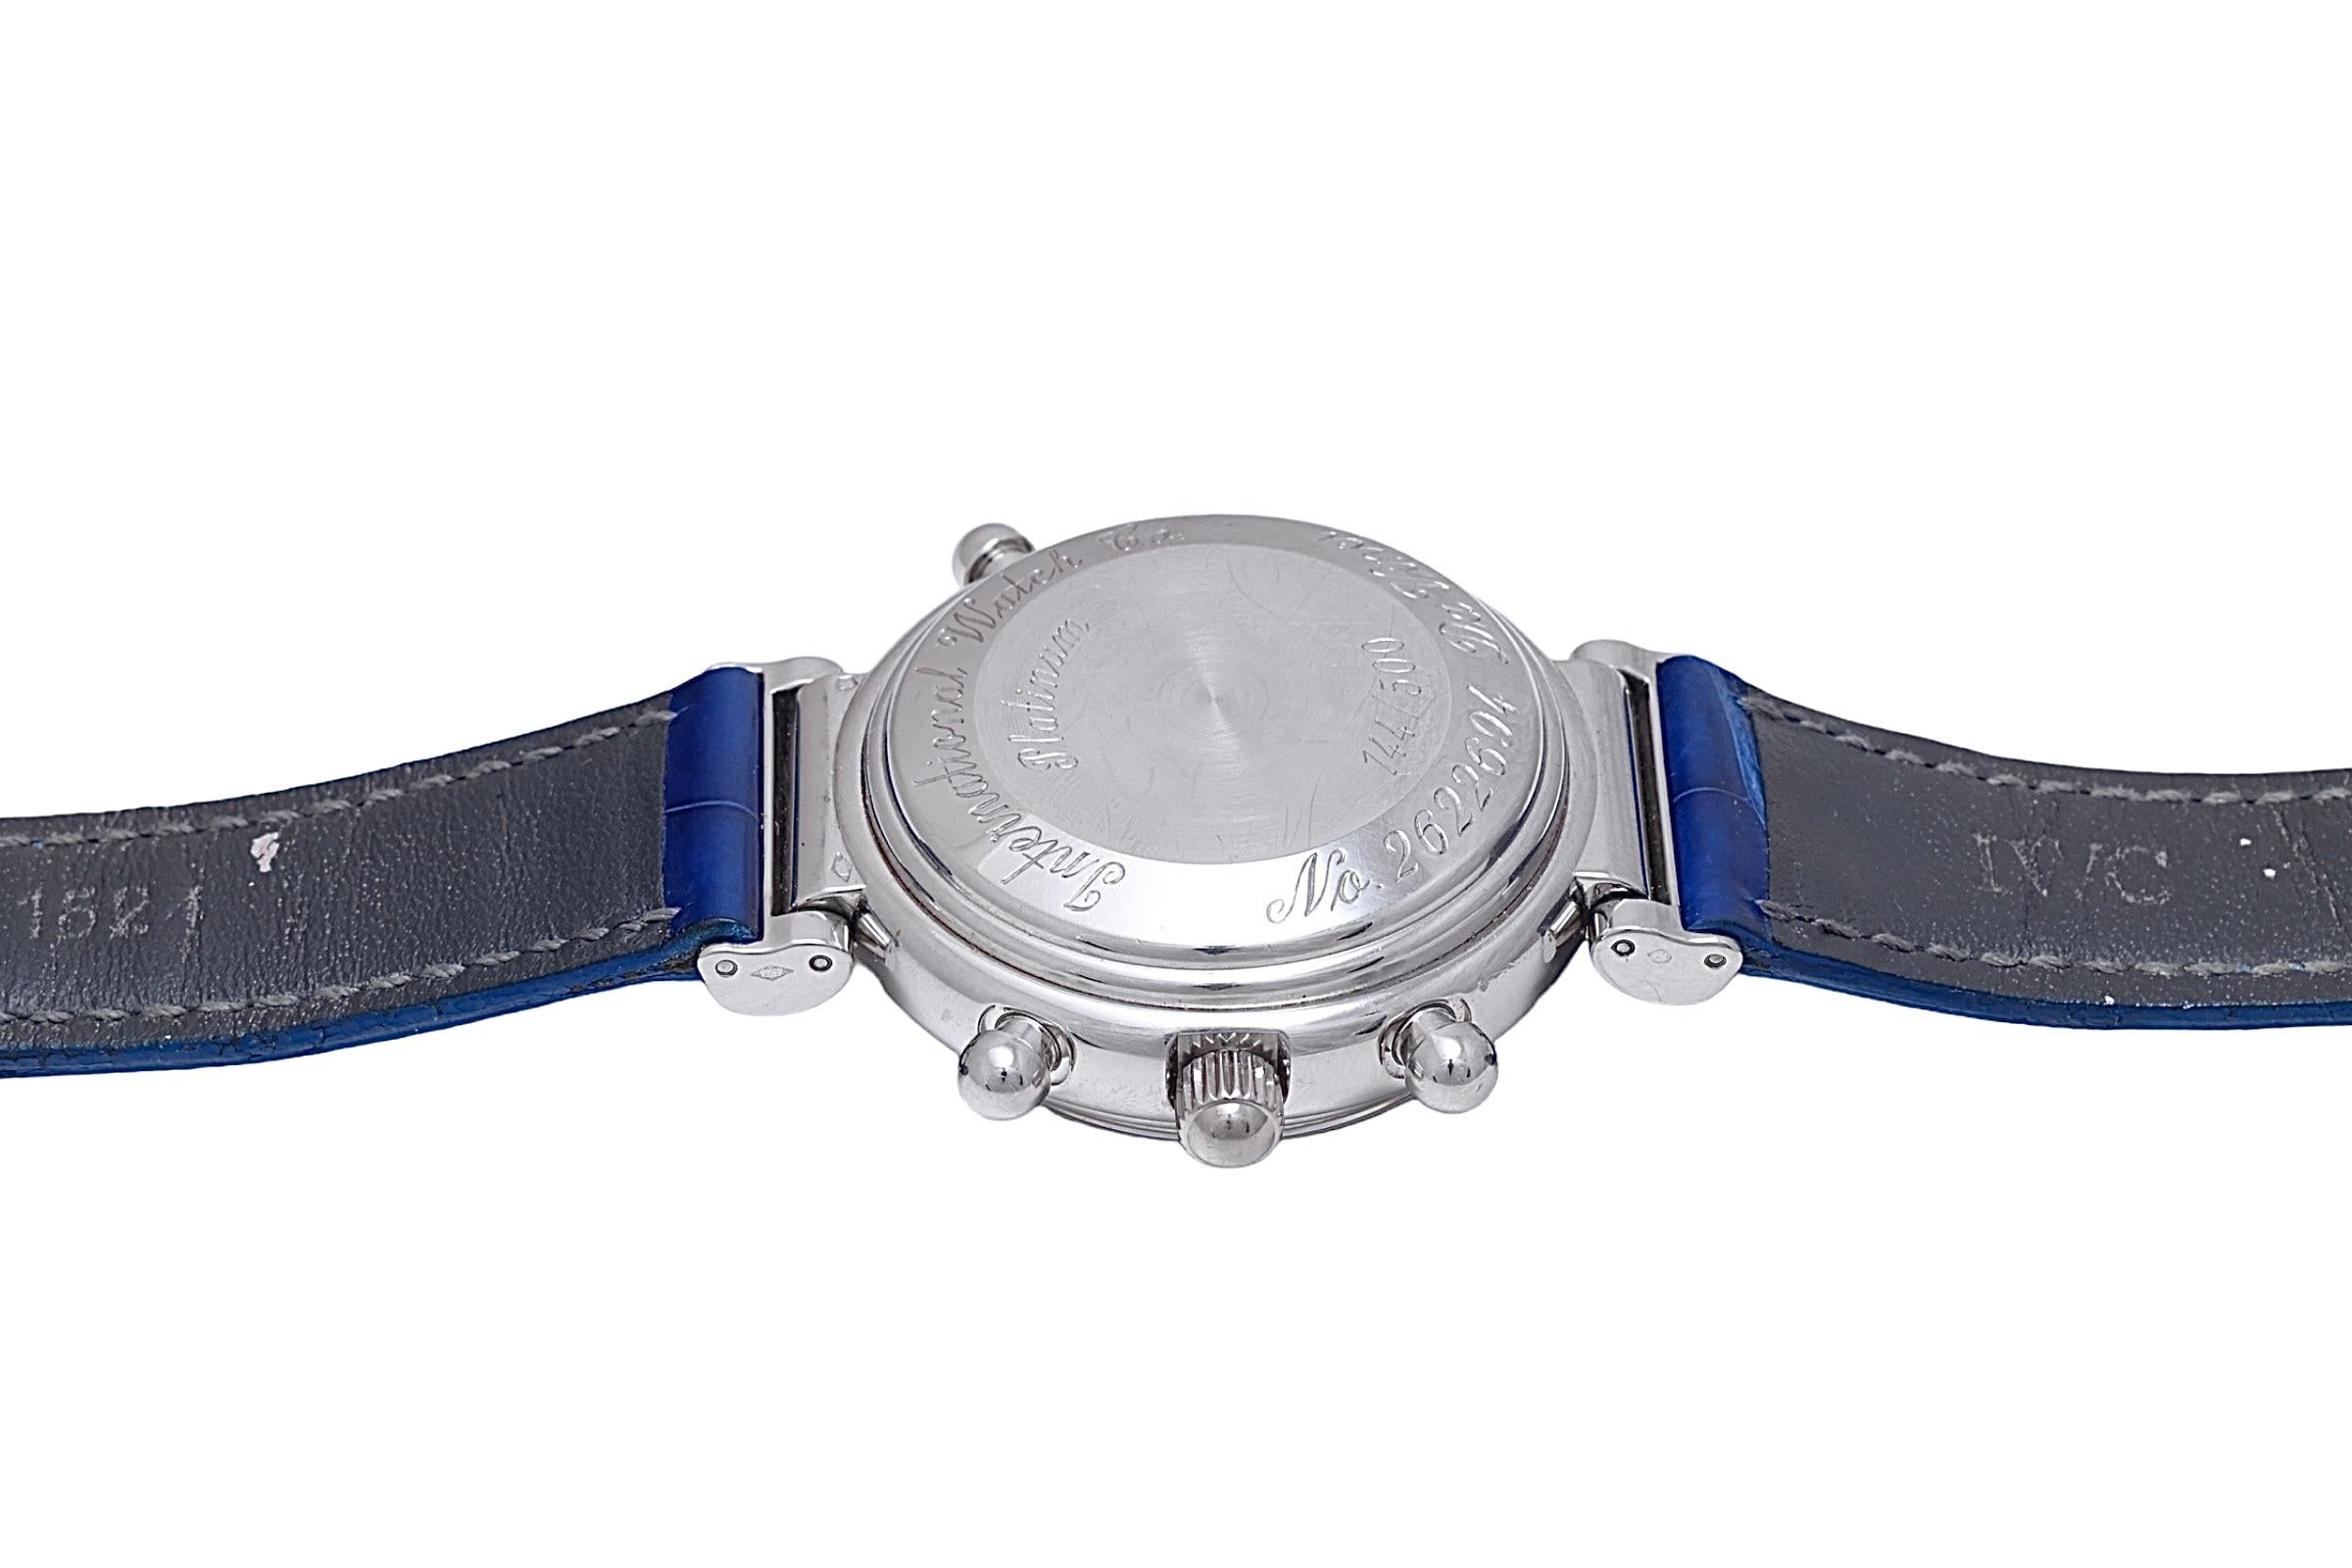 Platinum IWC Perpetual Calendar Split Second Chronograph Limited Wrist Watch3751 For Sale 6